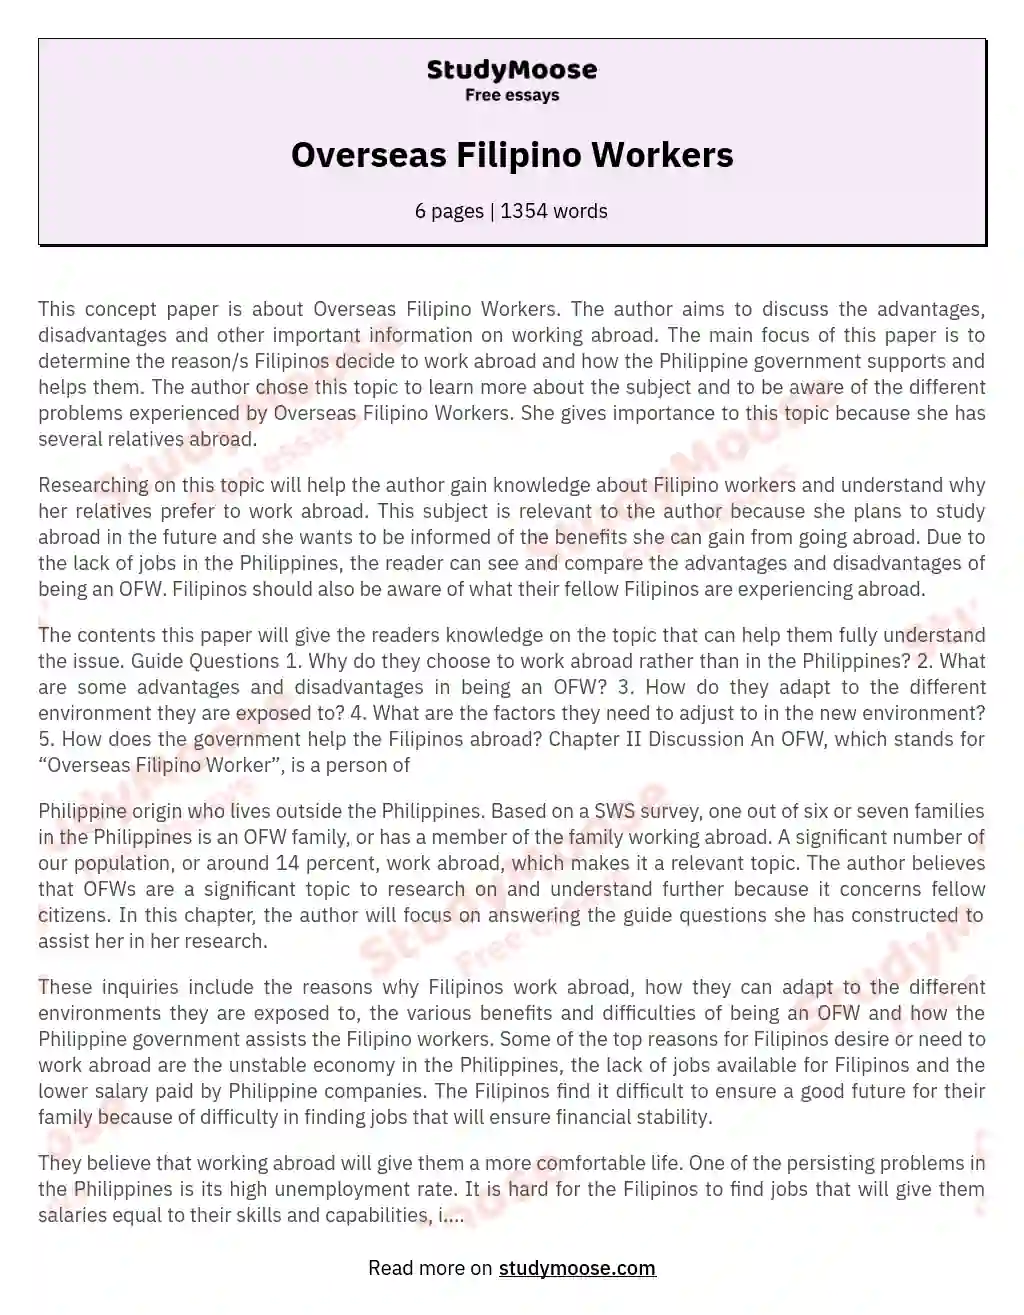 Overseas Filipino Workers essay